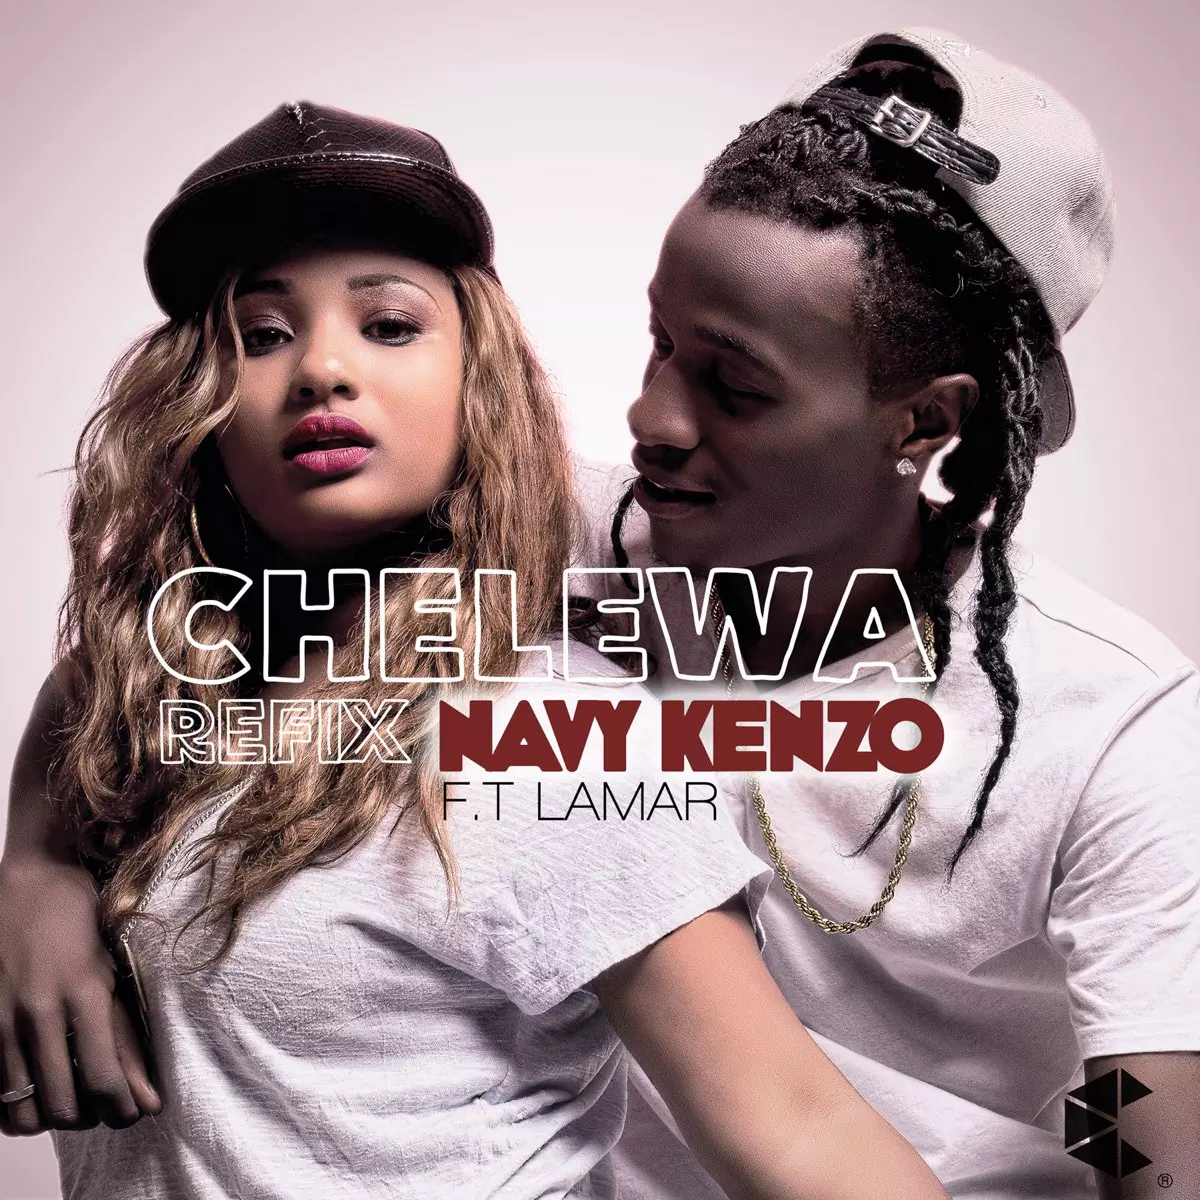 Chelewa (The Refix) [feat. Lamar] - Single by Navy Kenzo on Apple Music